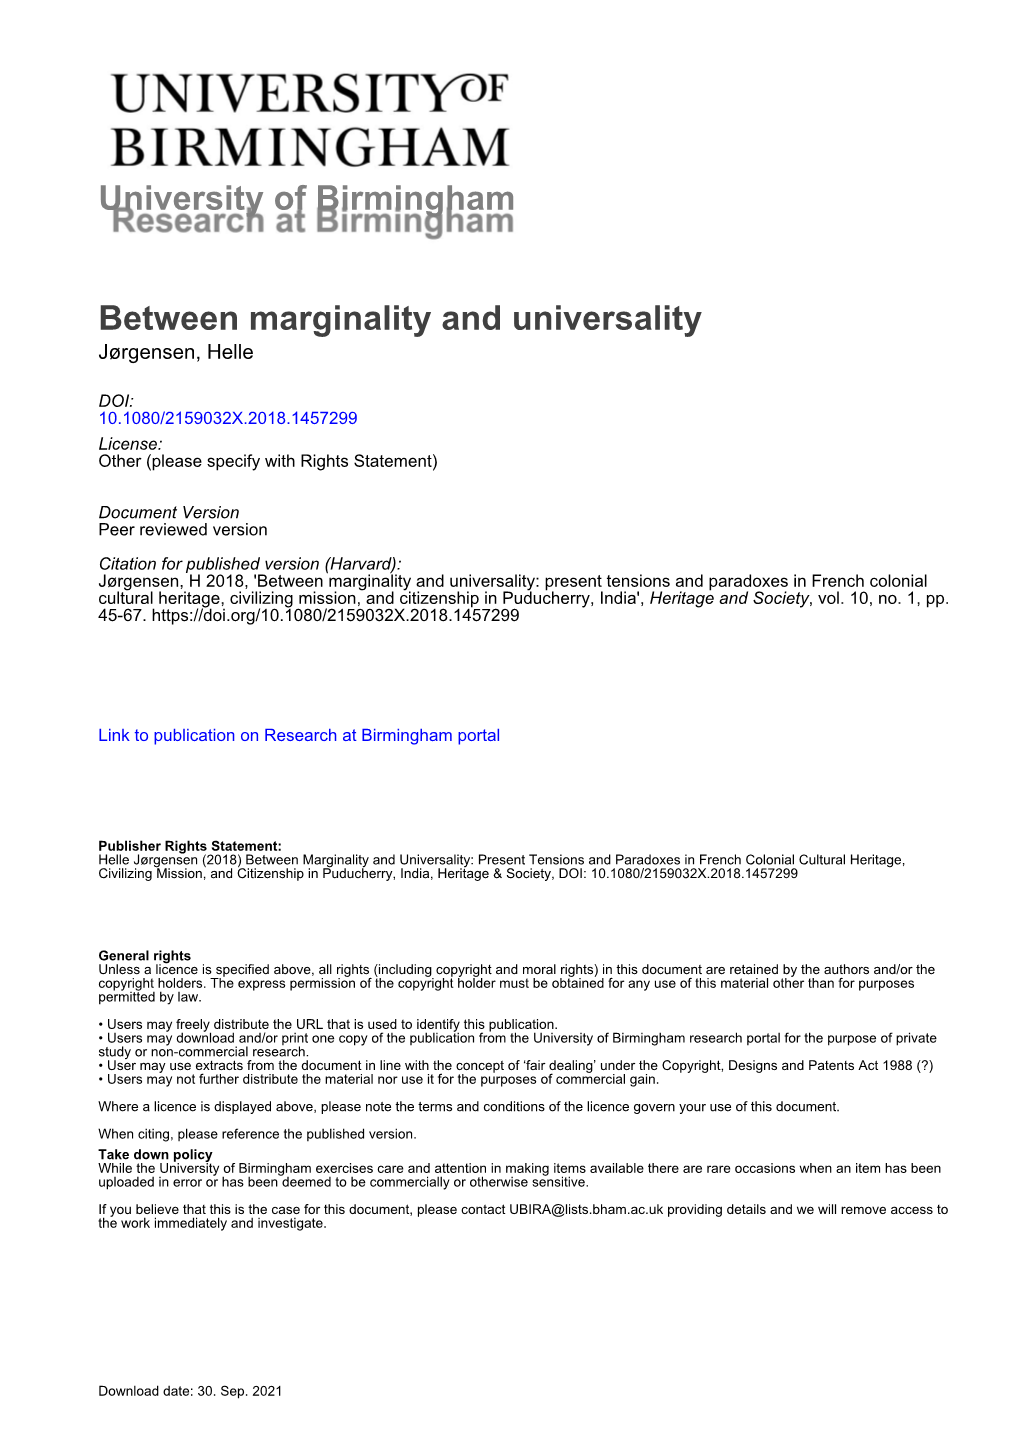 University of Birmingham Between Marginality and Universality